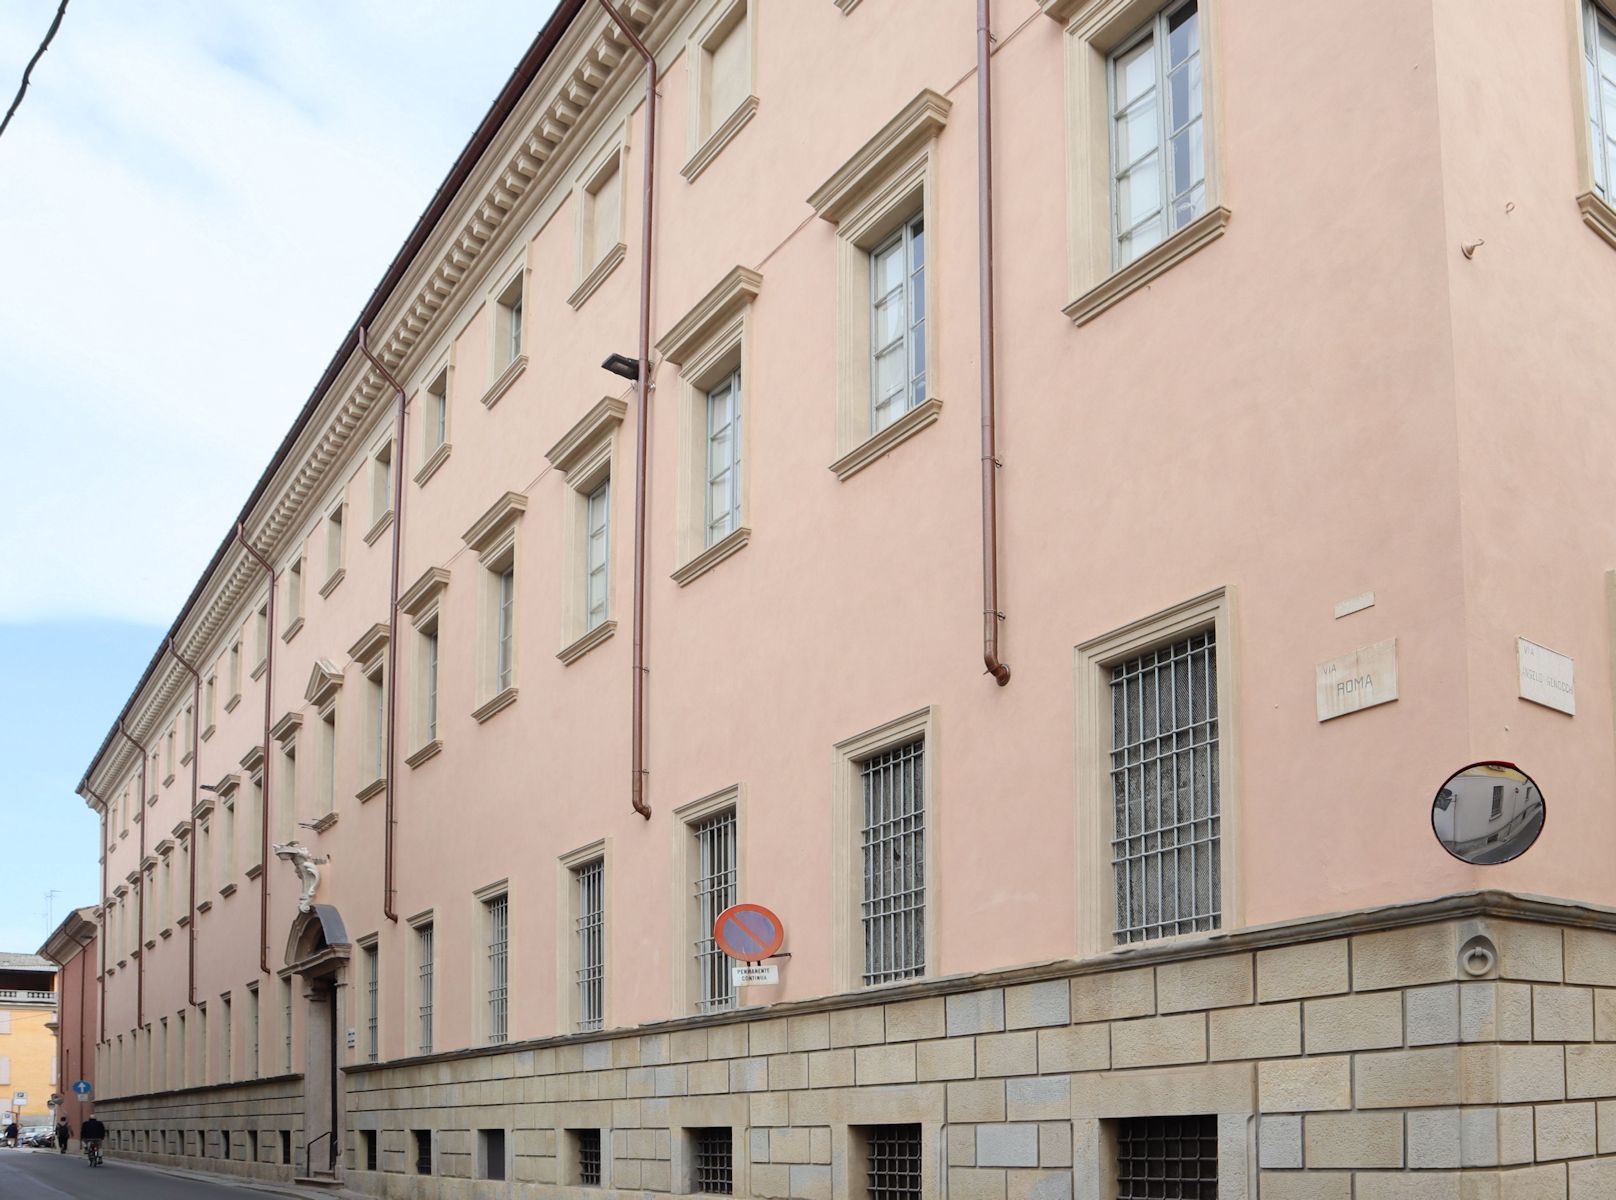 Institut der „Suore Orsoline di Maria Immacolata” in Piacenza